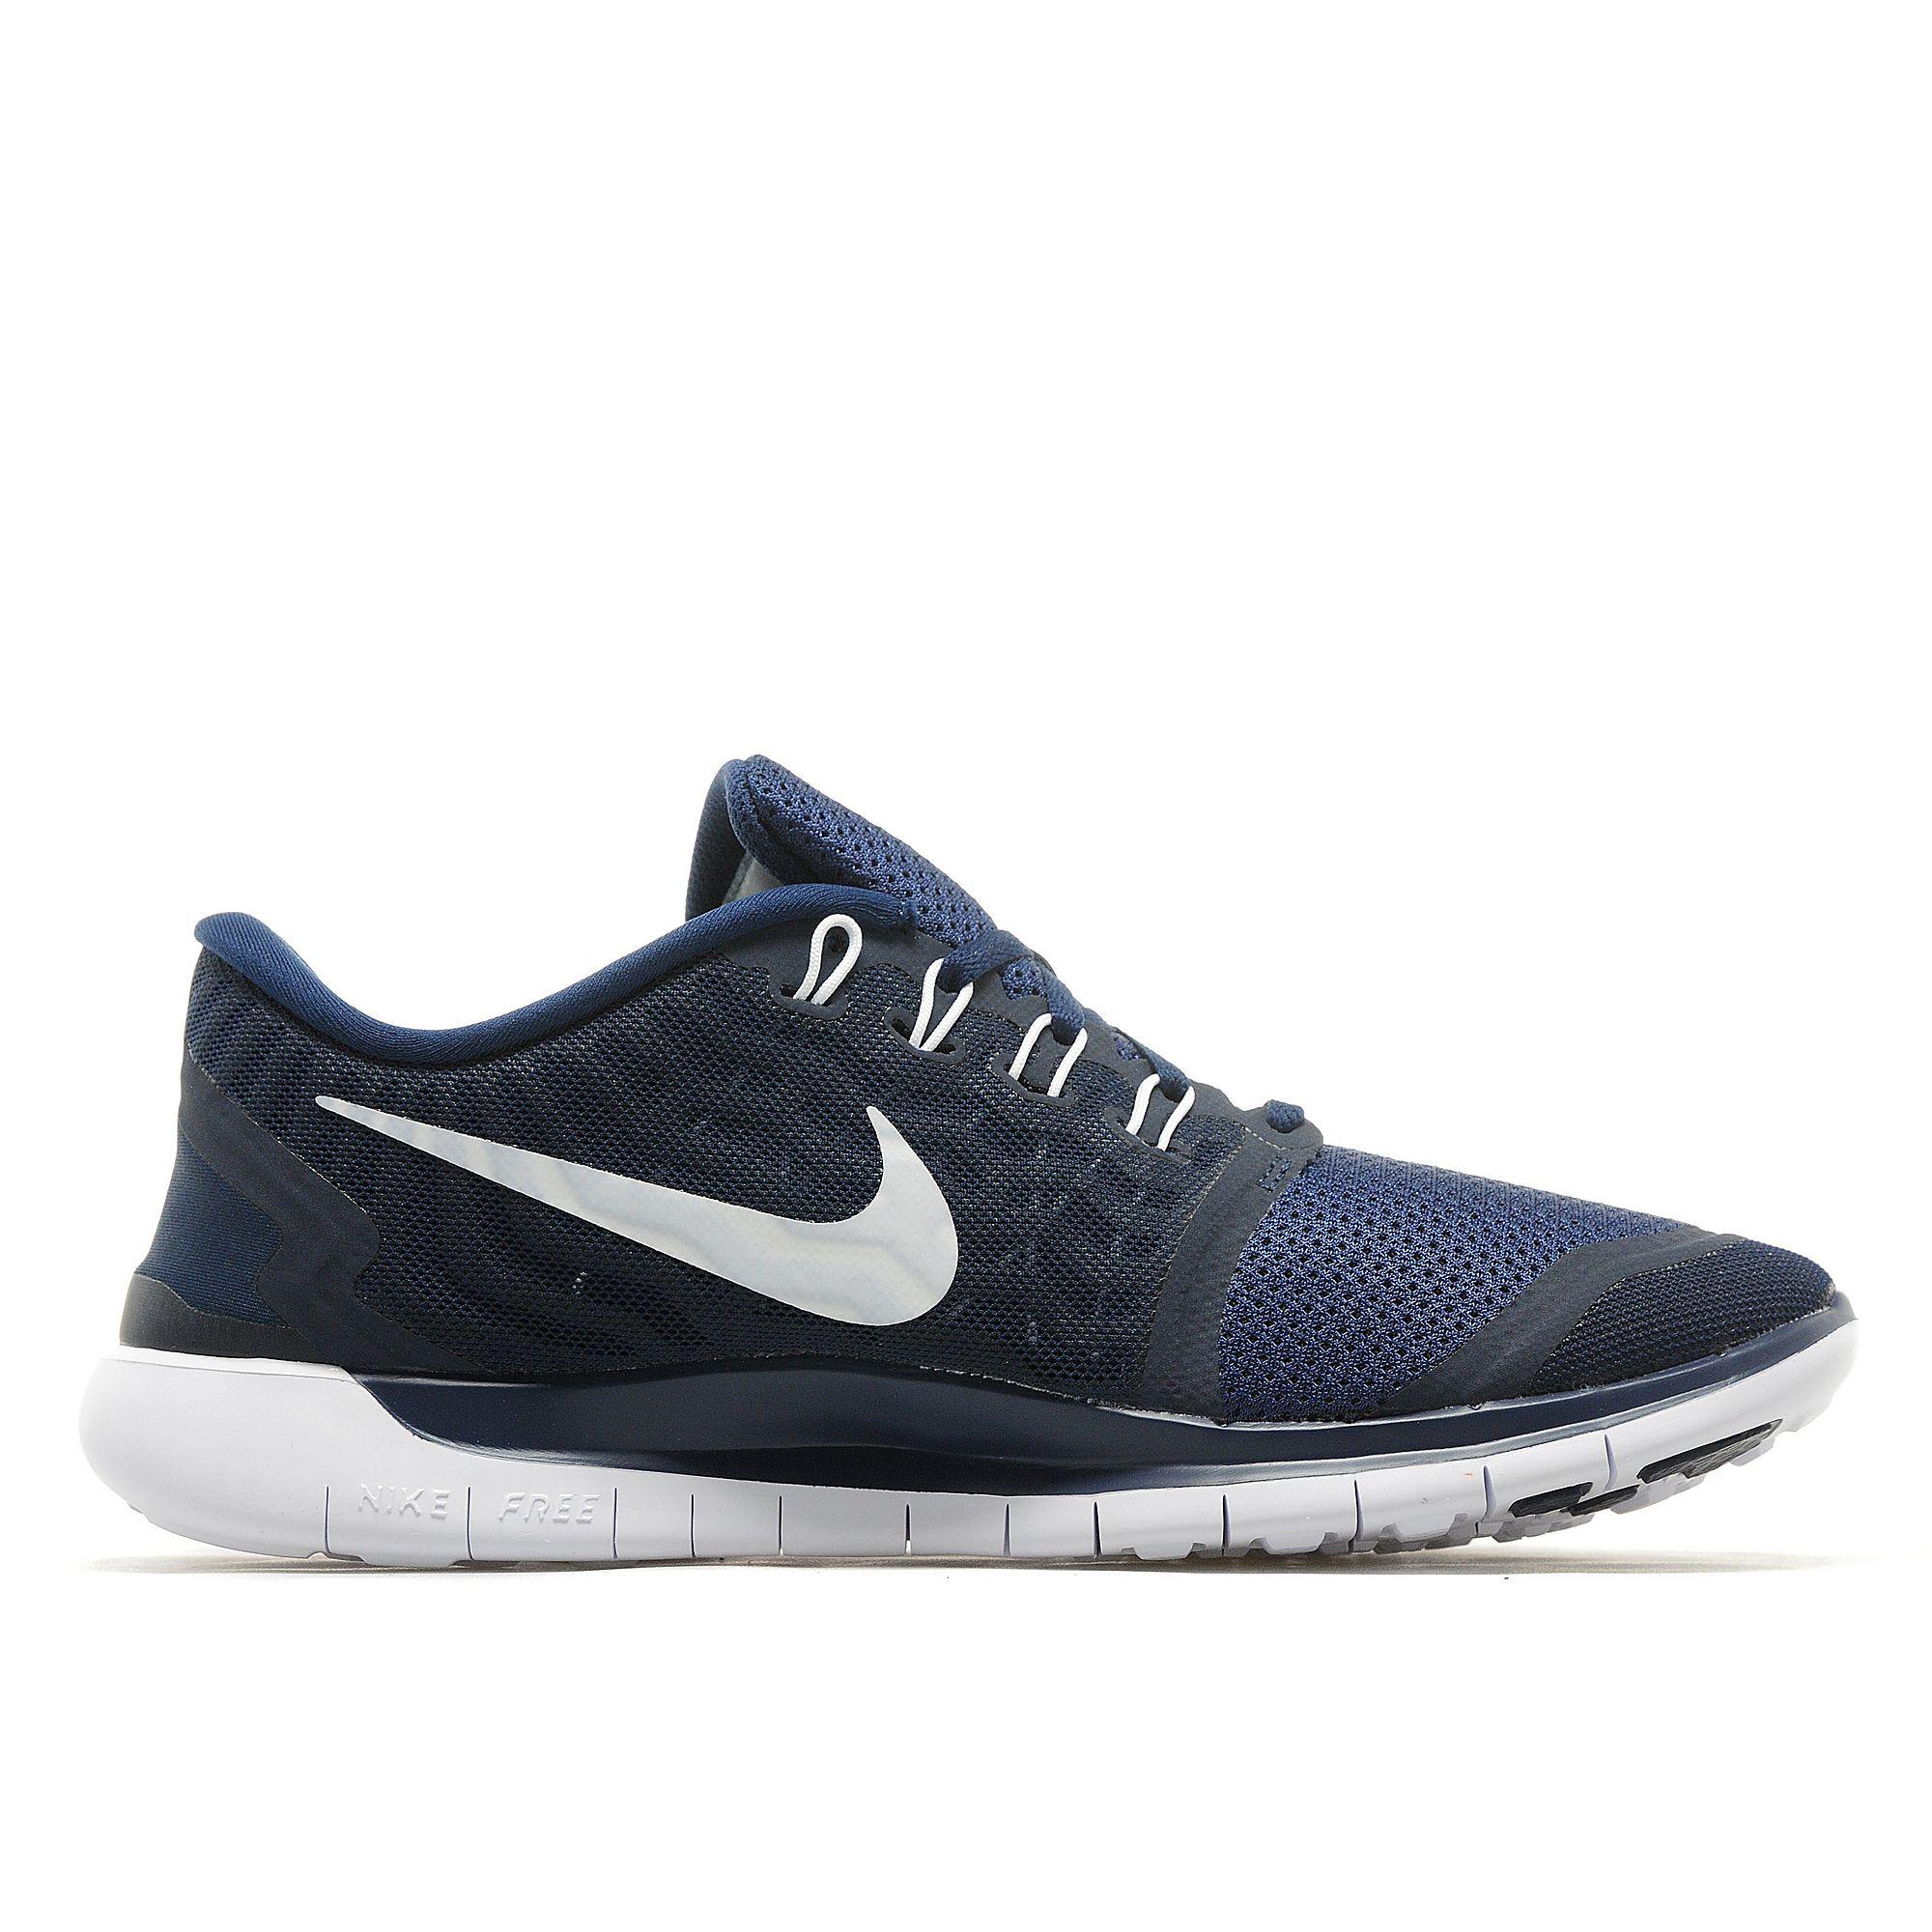 Nike Mens Free 5.0 Running Shoes - Midnight Navy/White - Tennisnuts.com